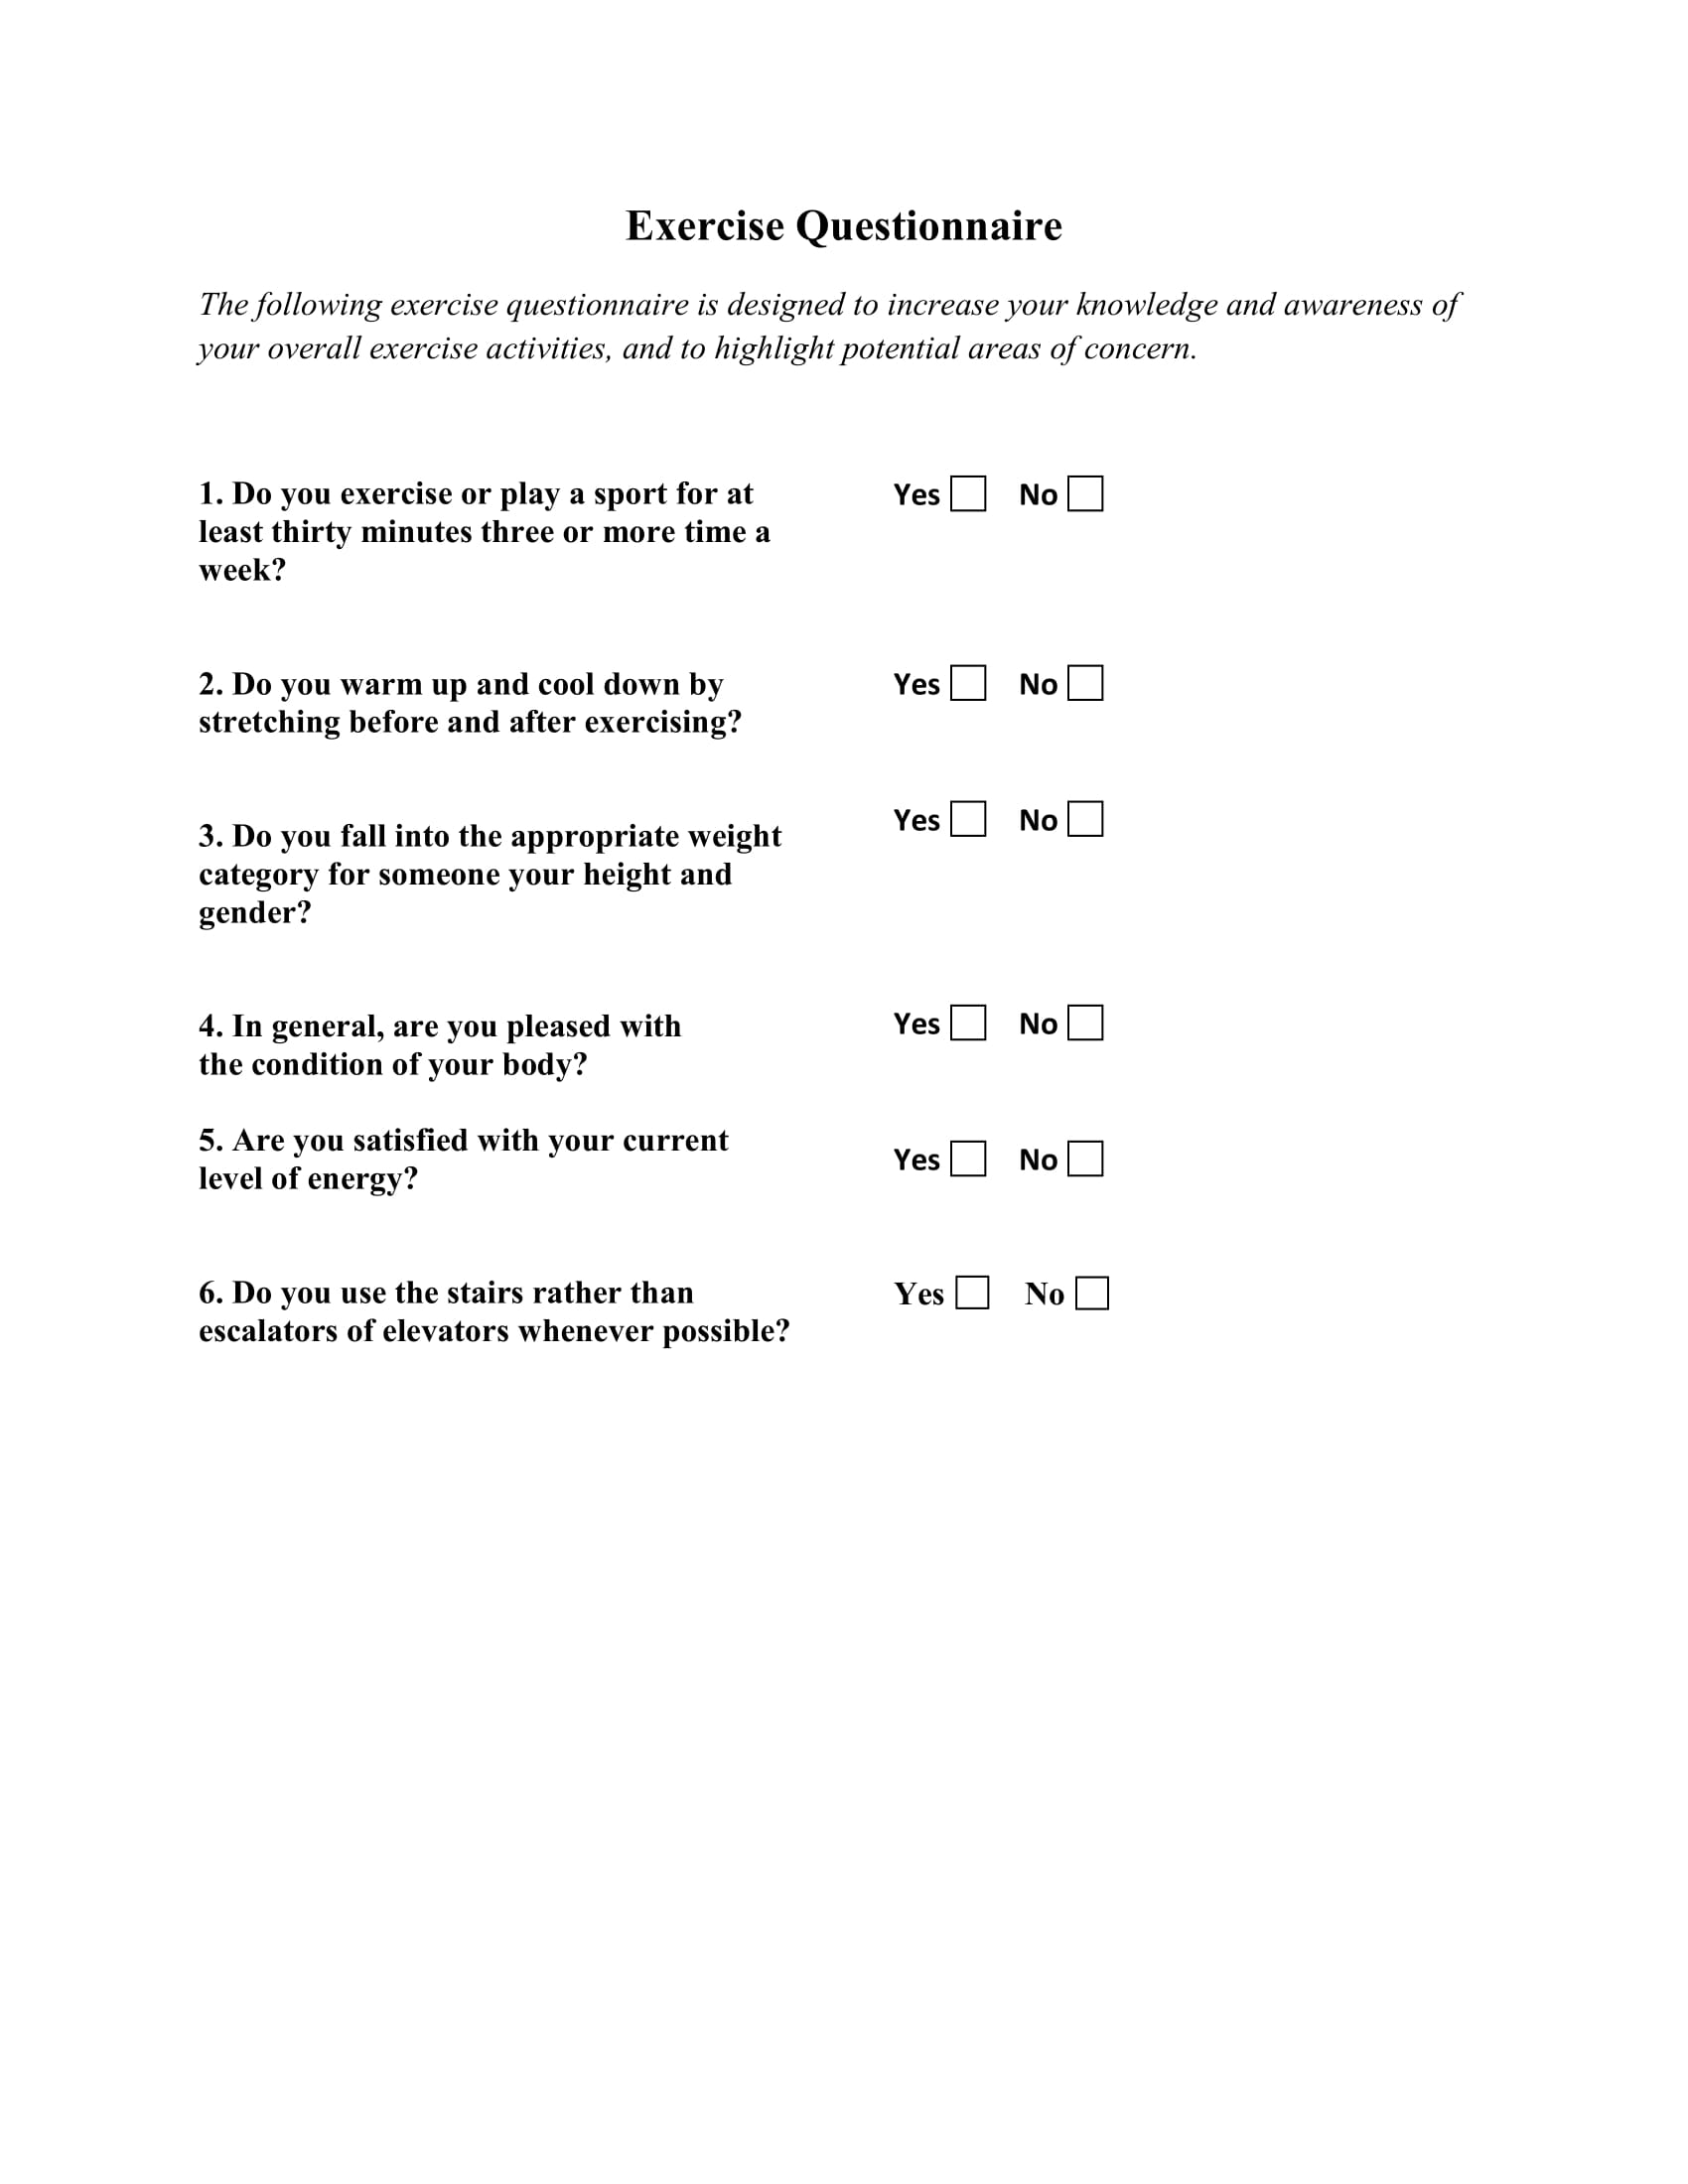 Exercise Questionnaire Form